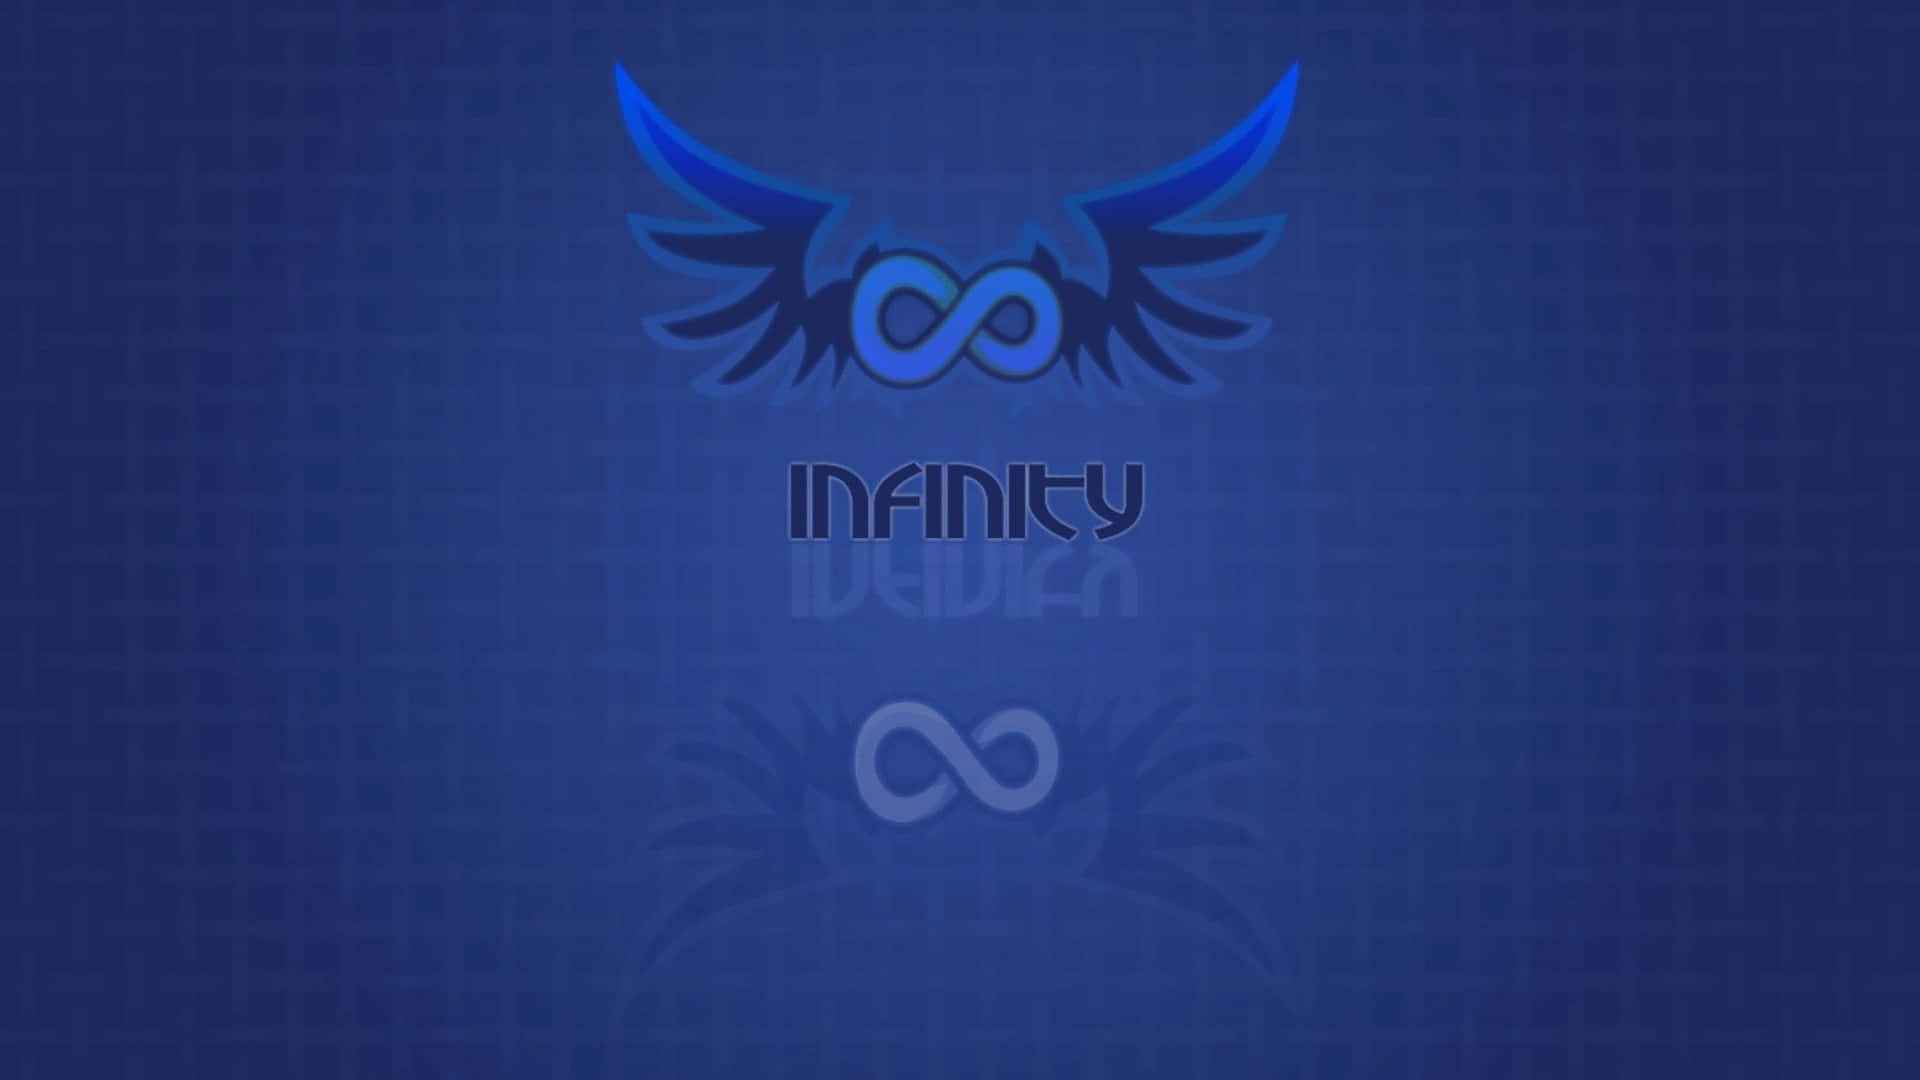 Infinity2048 X 1152 Baggrund.